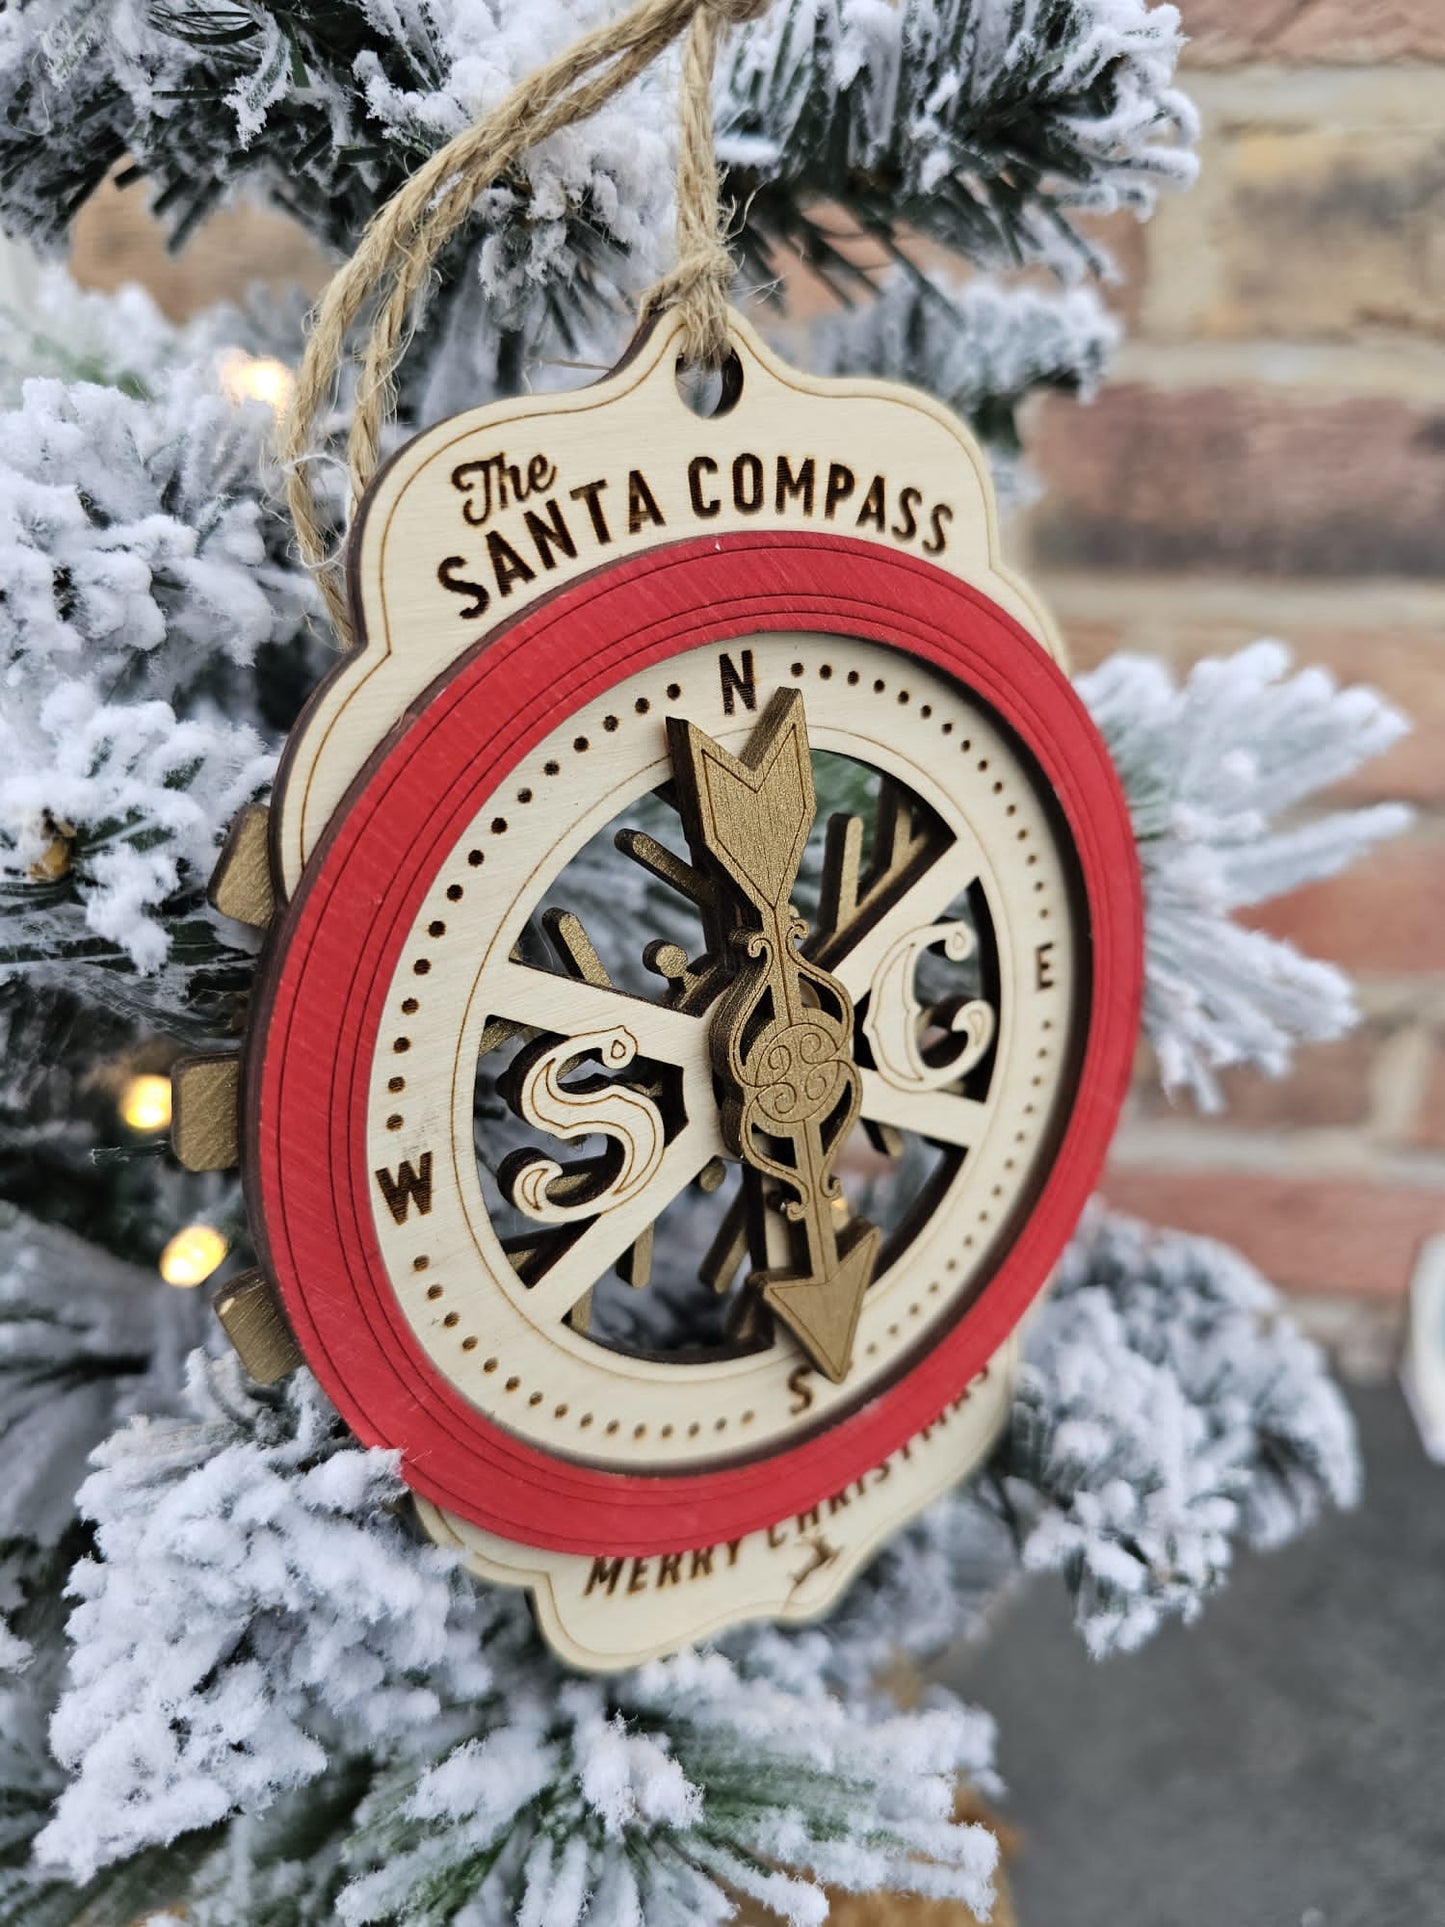 Interactive Santa's Compass ornament